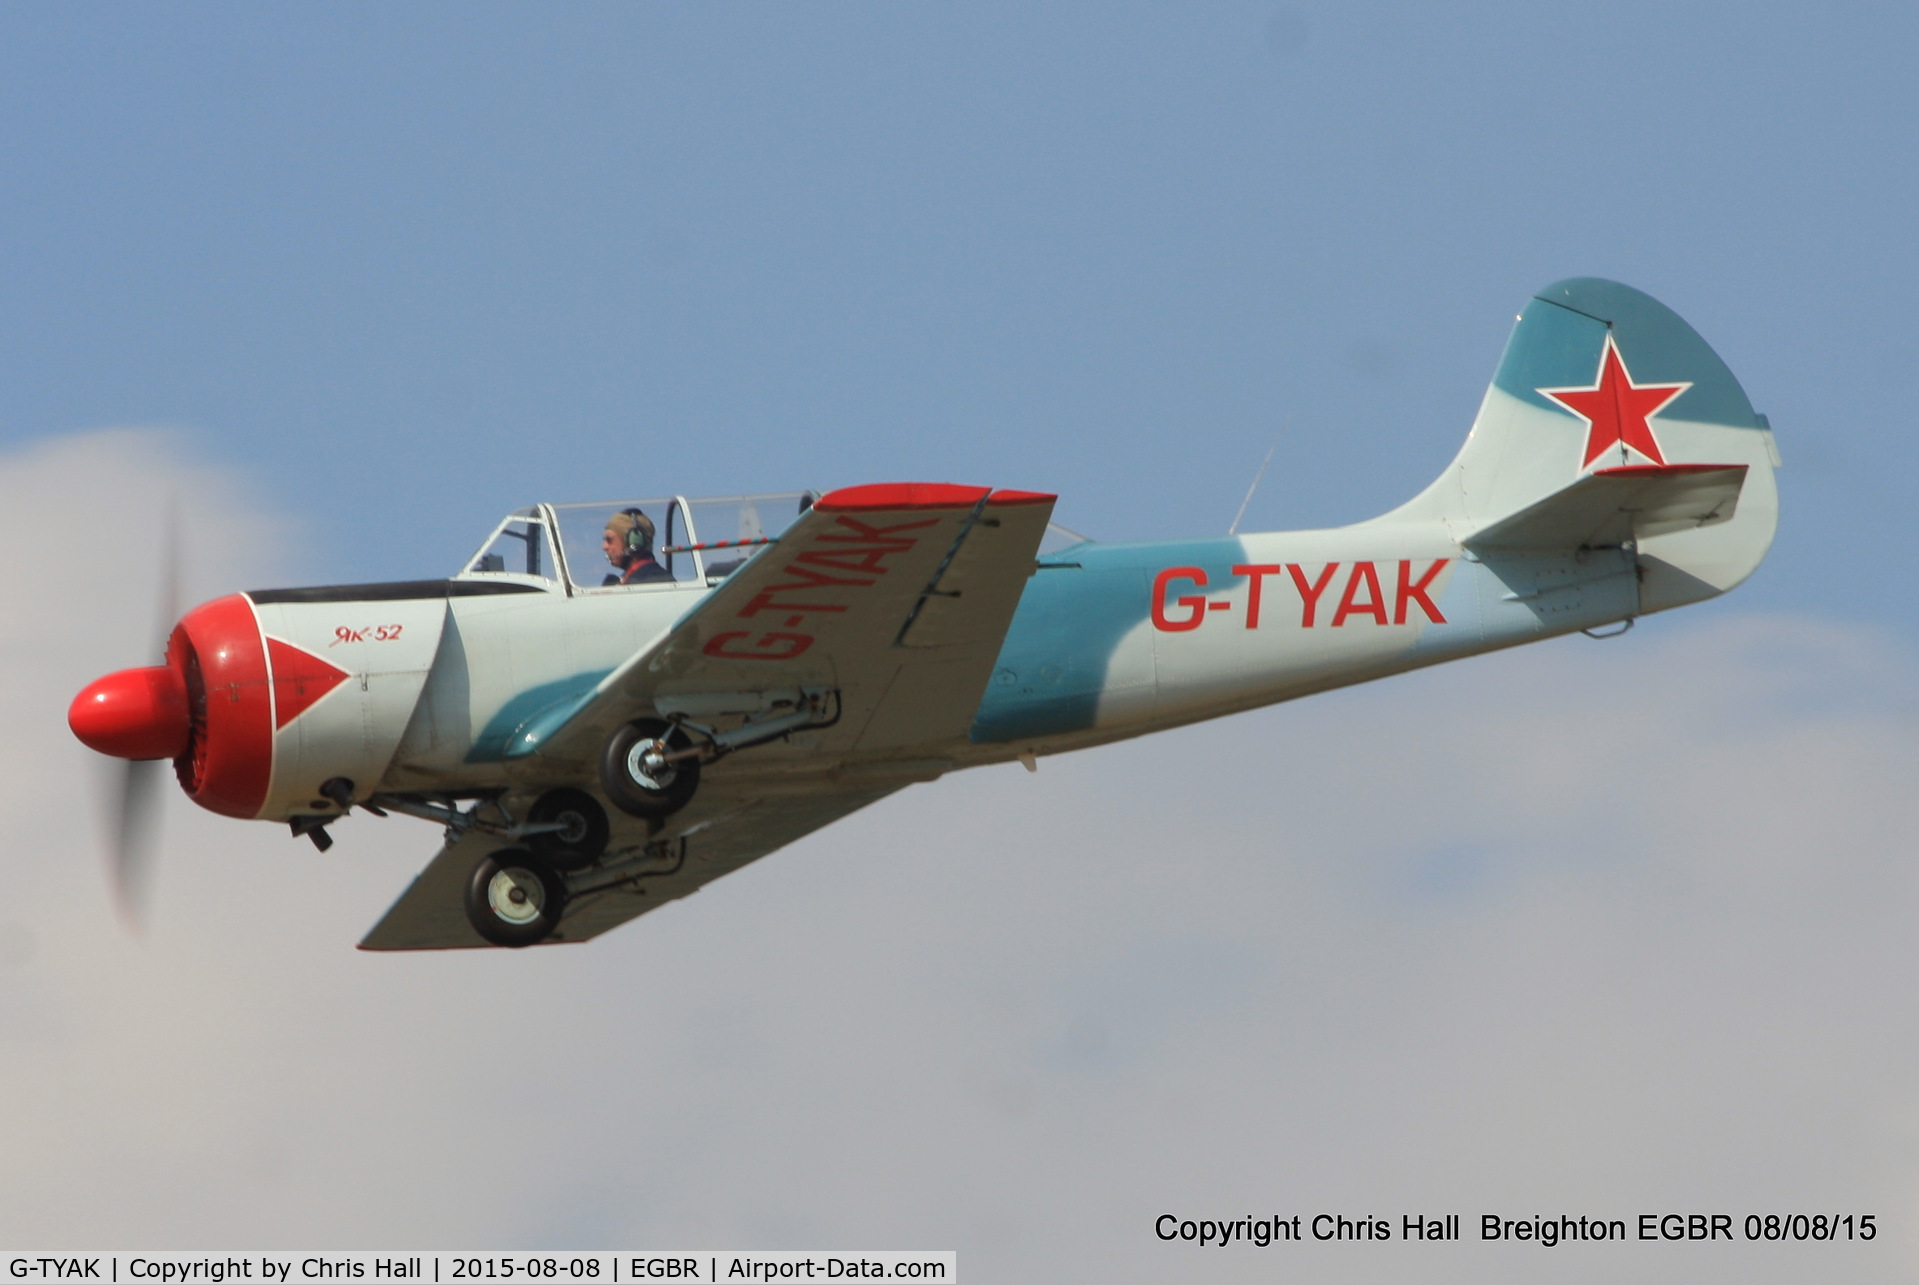 G-TYAK, 1989 Bacau Yak-52 C/N 899907, at Breighton